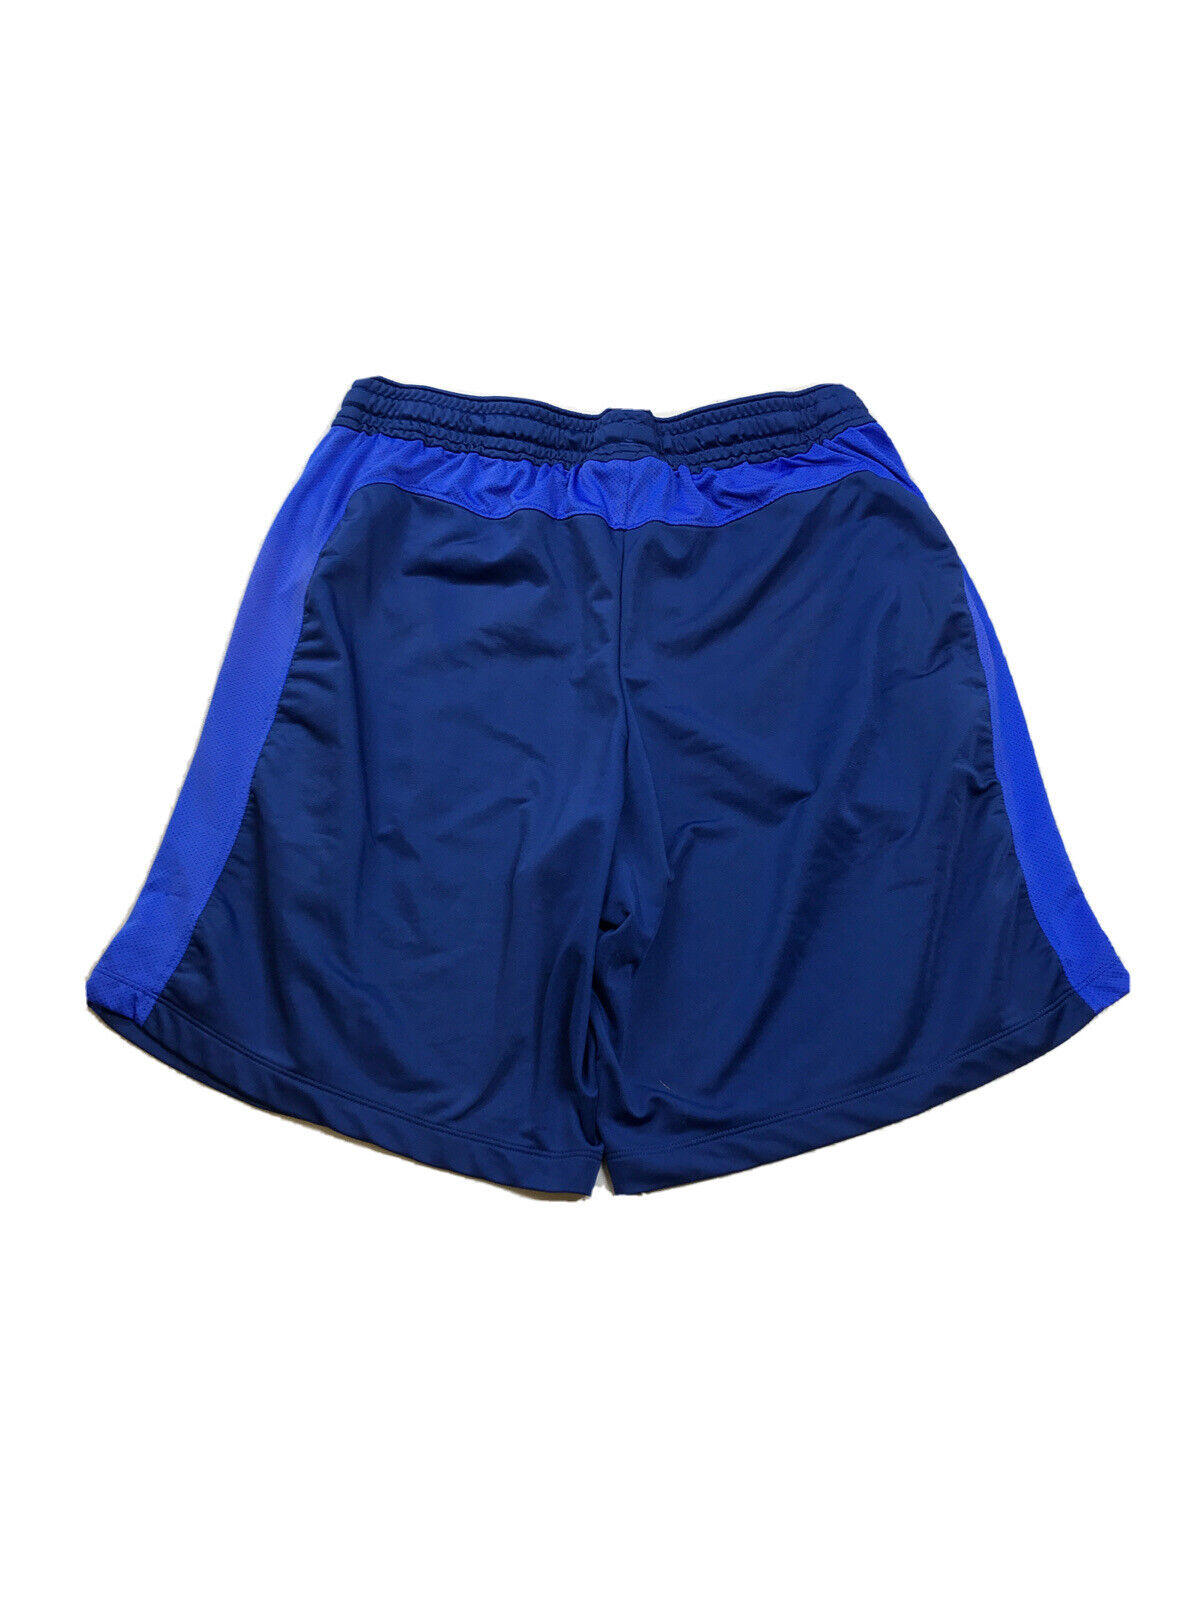 Under Armour Men's Blue HeatGear Athletic Shorts w/ Pockets - L